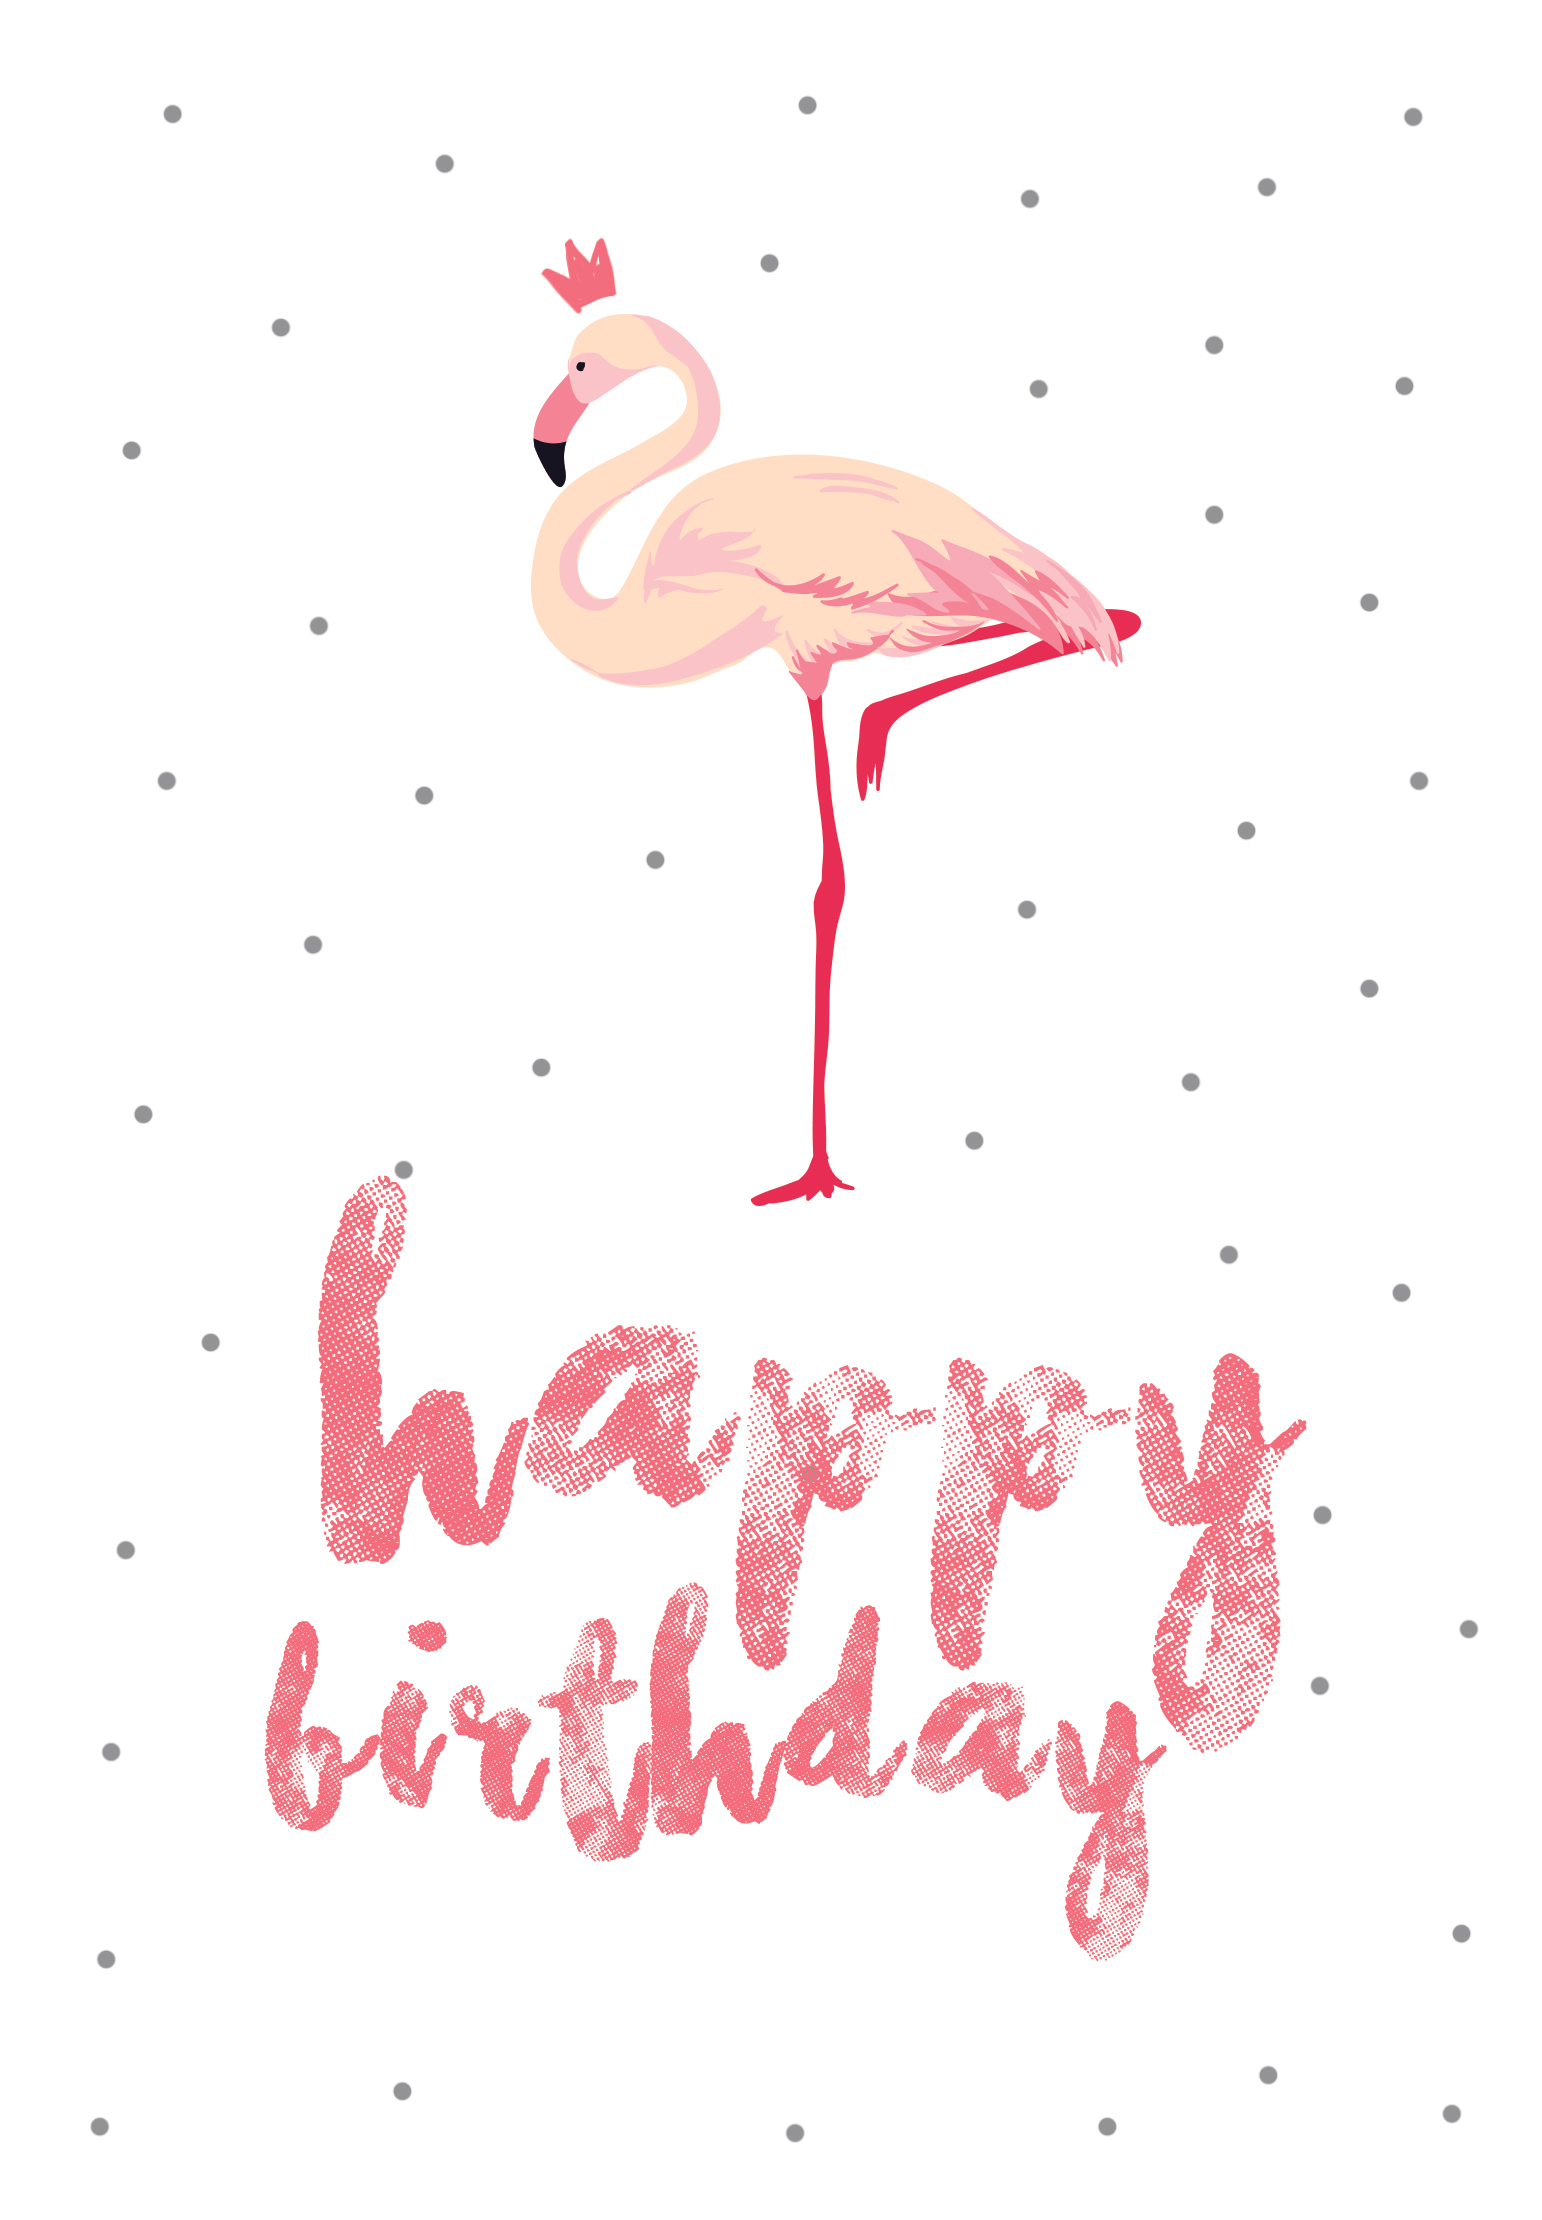 Flamingo Birthday - Free Printable Birthday Card | Greetings Island - Free Printable Greeting Cards No Sign Up